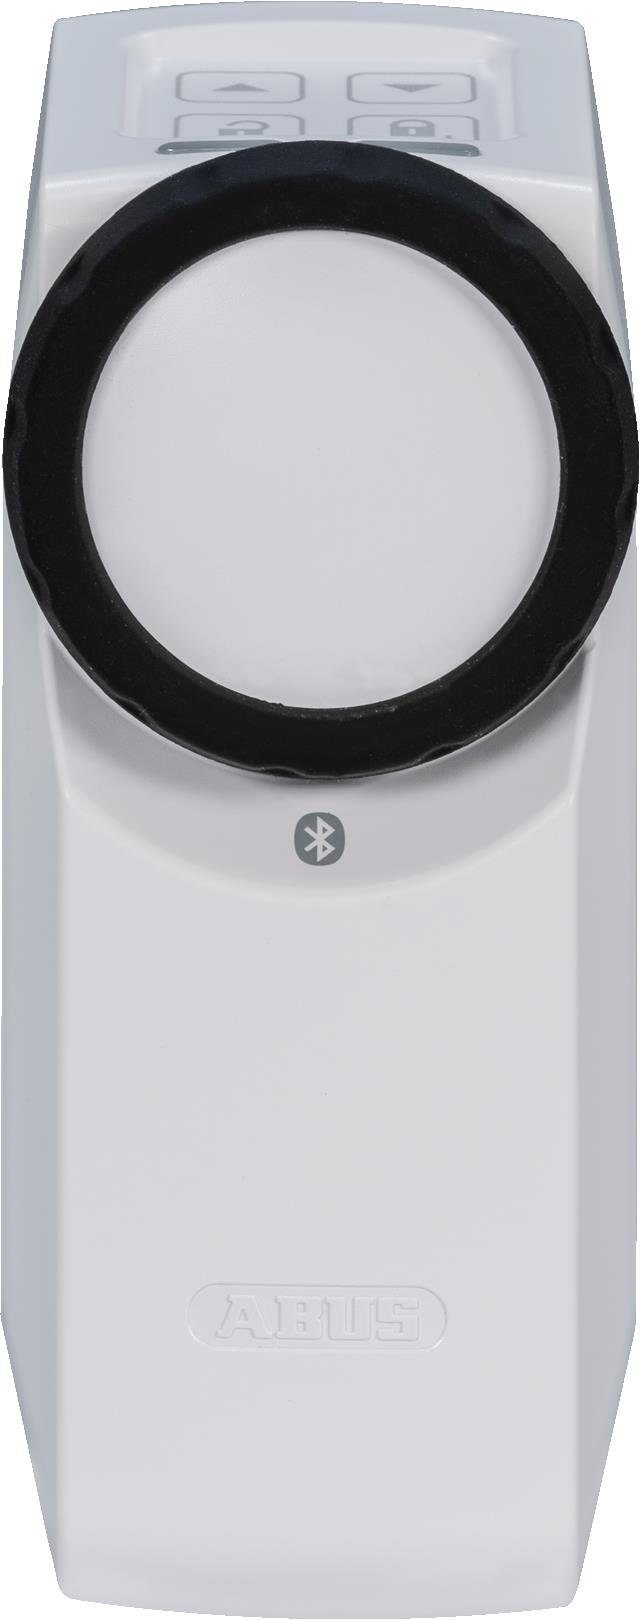 ABUS Türschlossantrieb Abus HomeTec Pro Bluetooth CFA3100 W weiß Elektronisches Türschloss